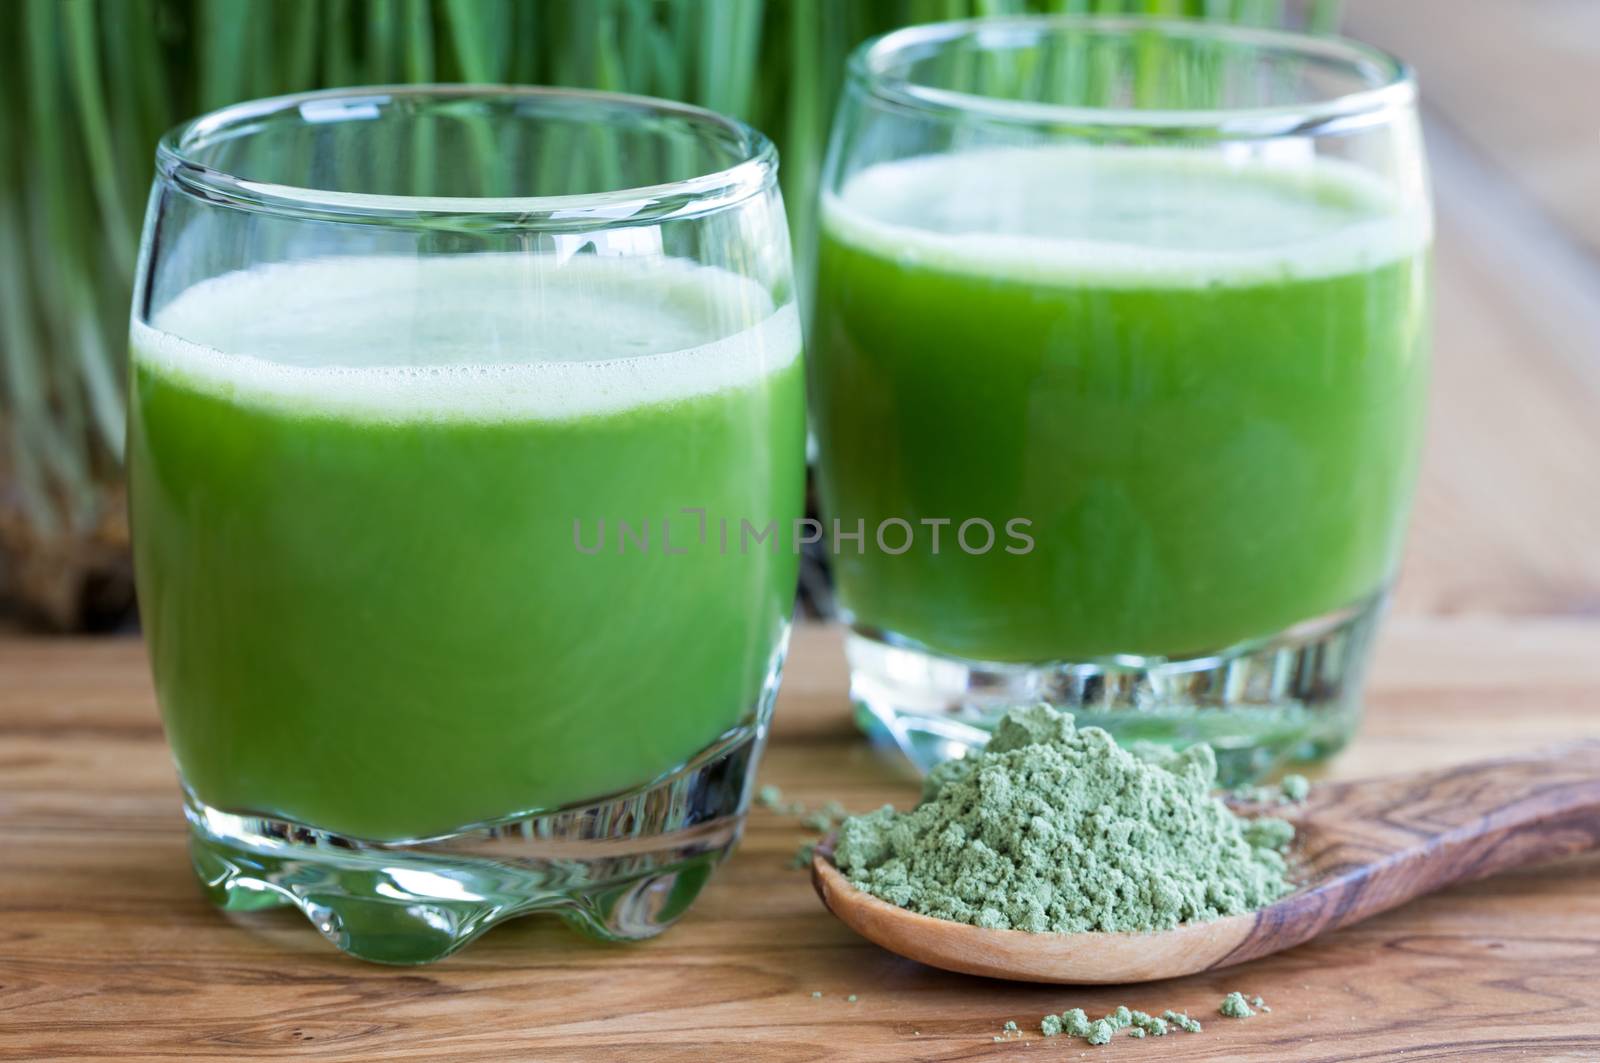 Two shots of fresh barley grass juice by madeleine_steinbach